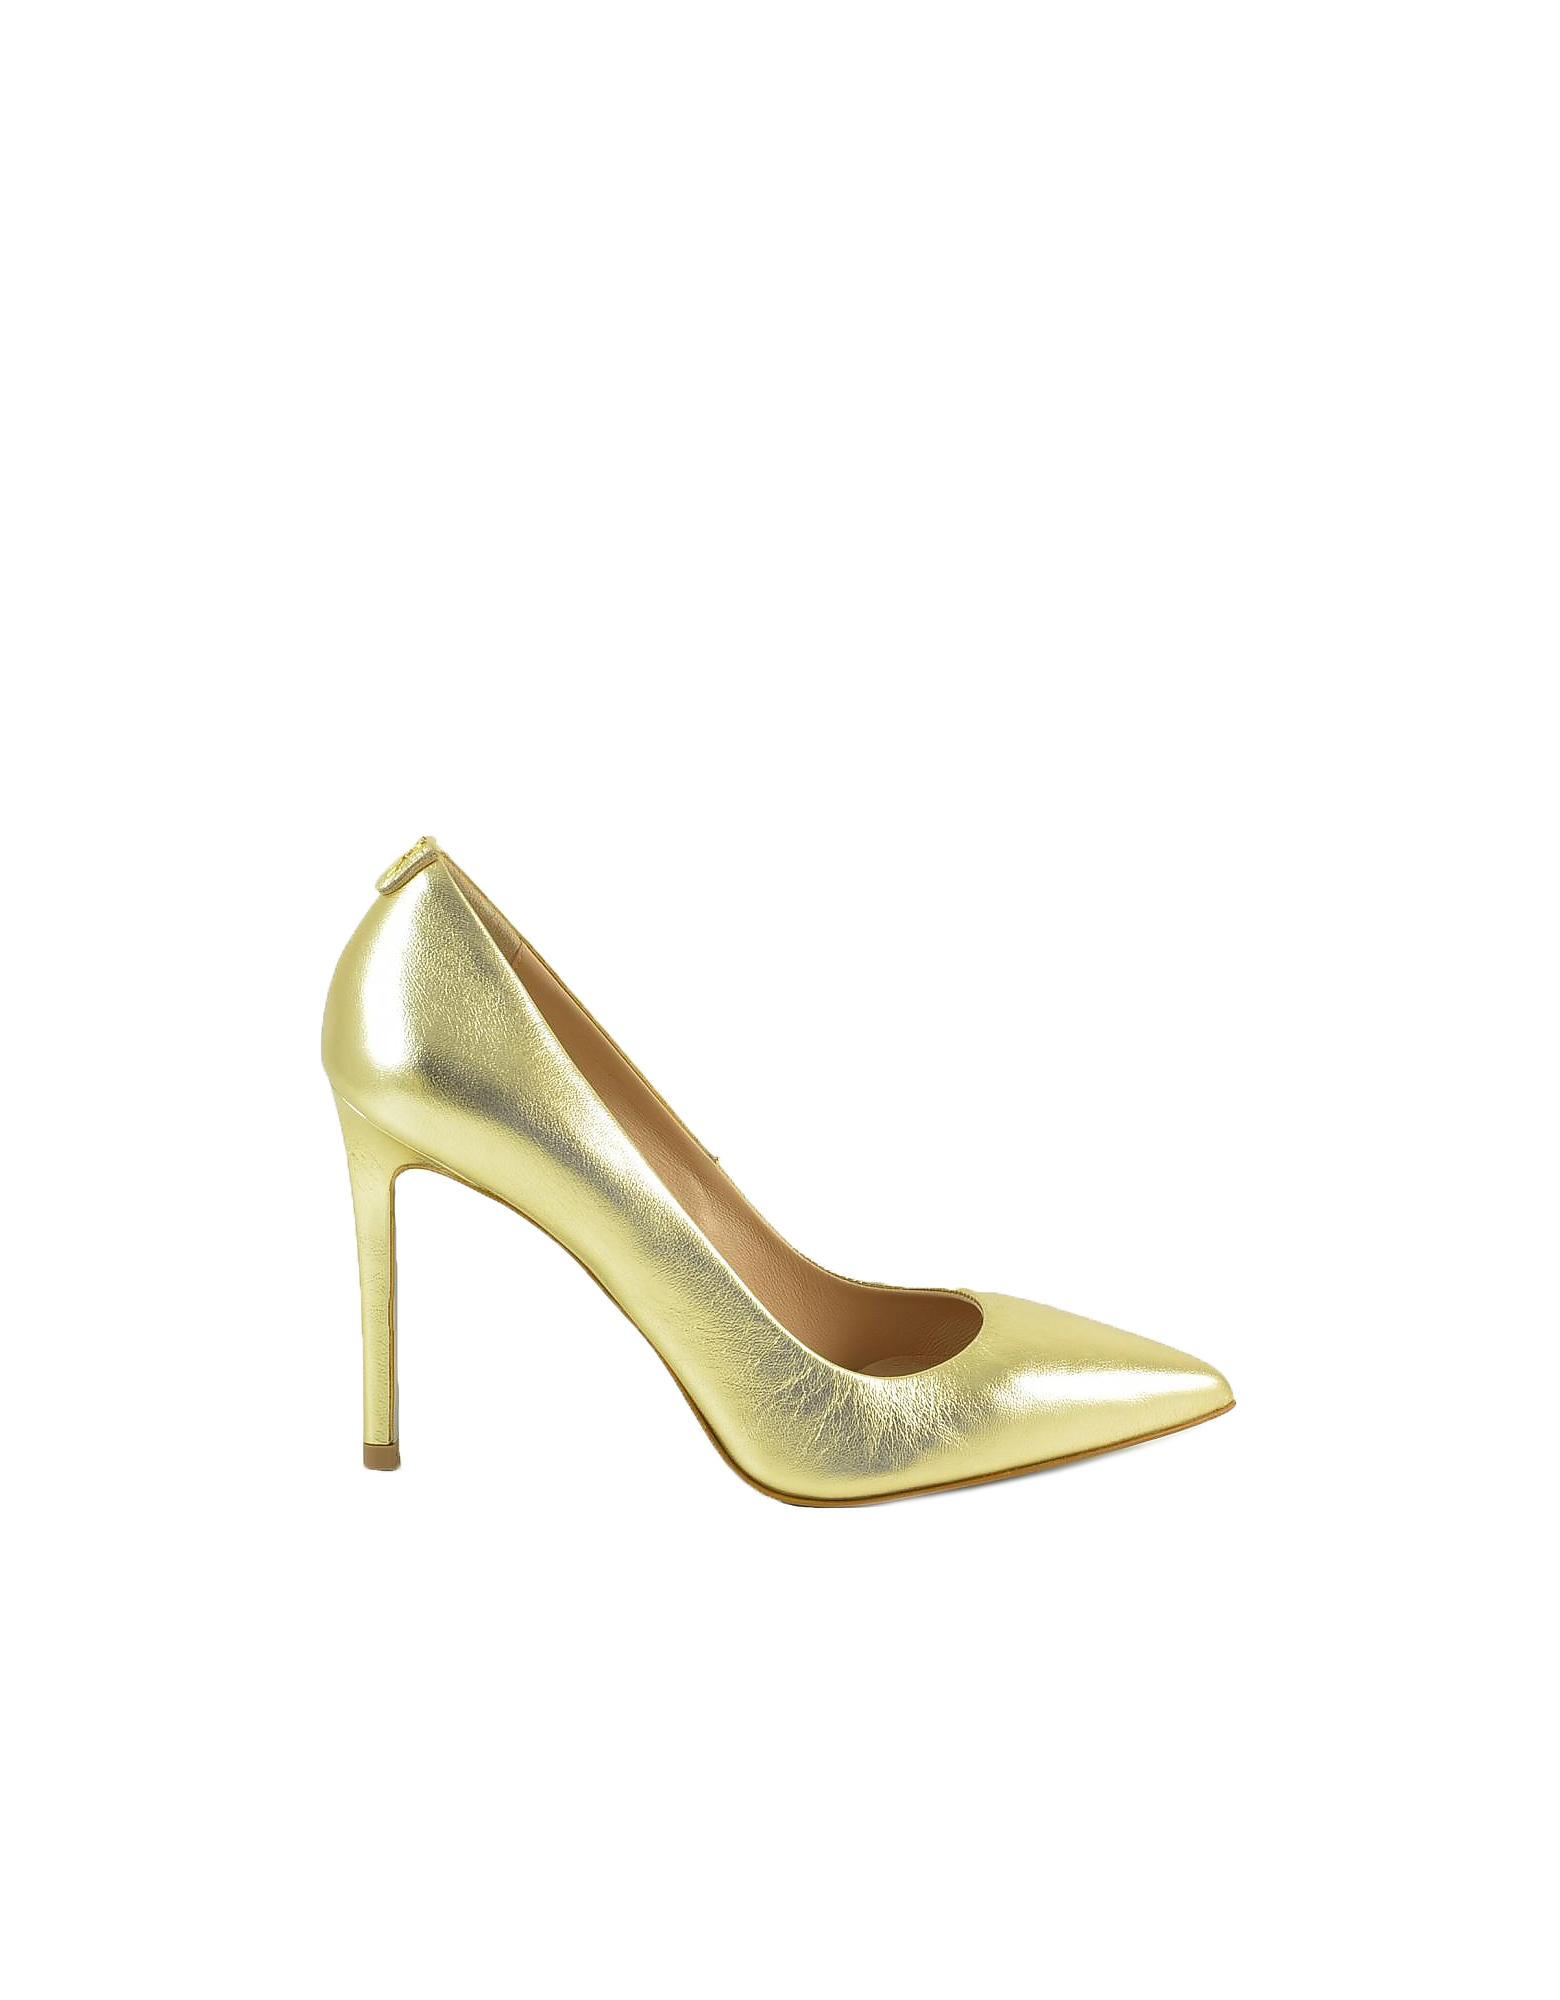 Patrizia Pepe  Shoes Gold Laminated Leather Pumps